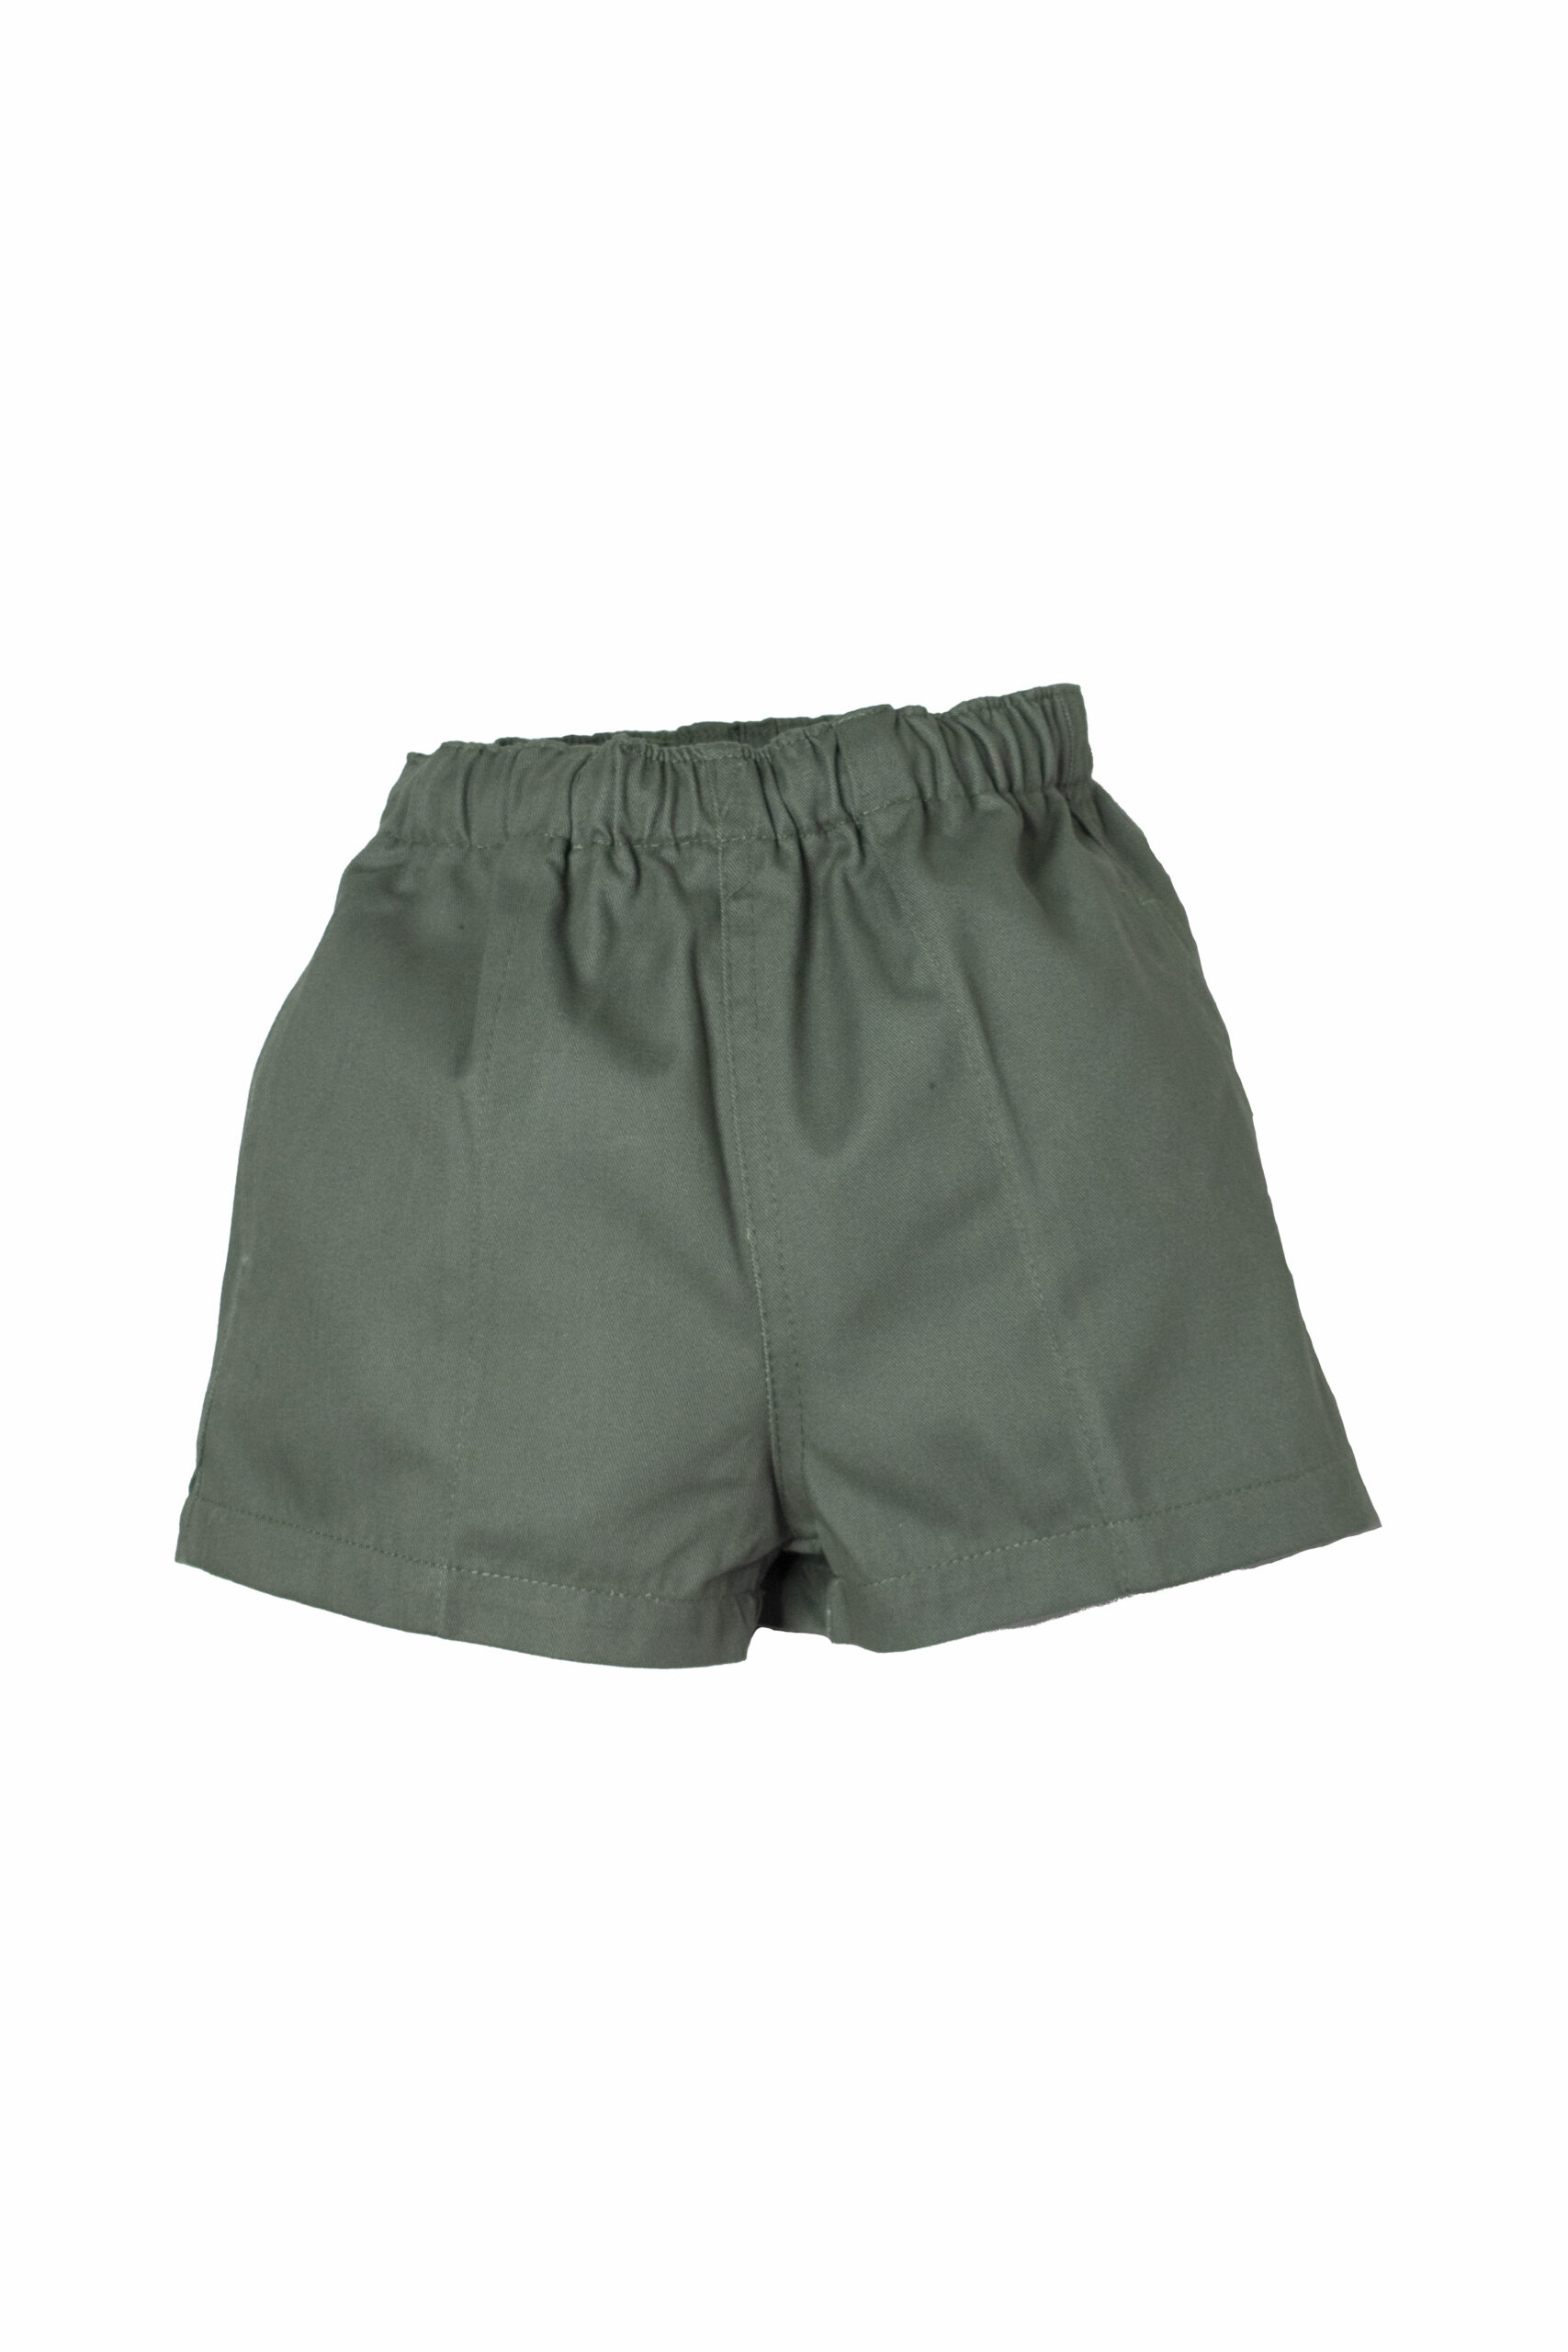 Children's Springbok Boxer Shorts - Big John Online Clothing Company